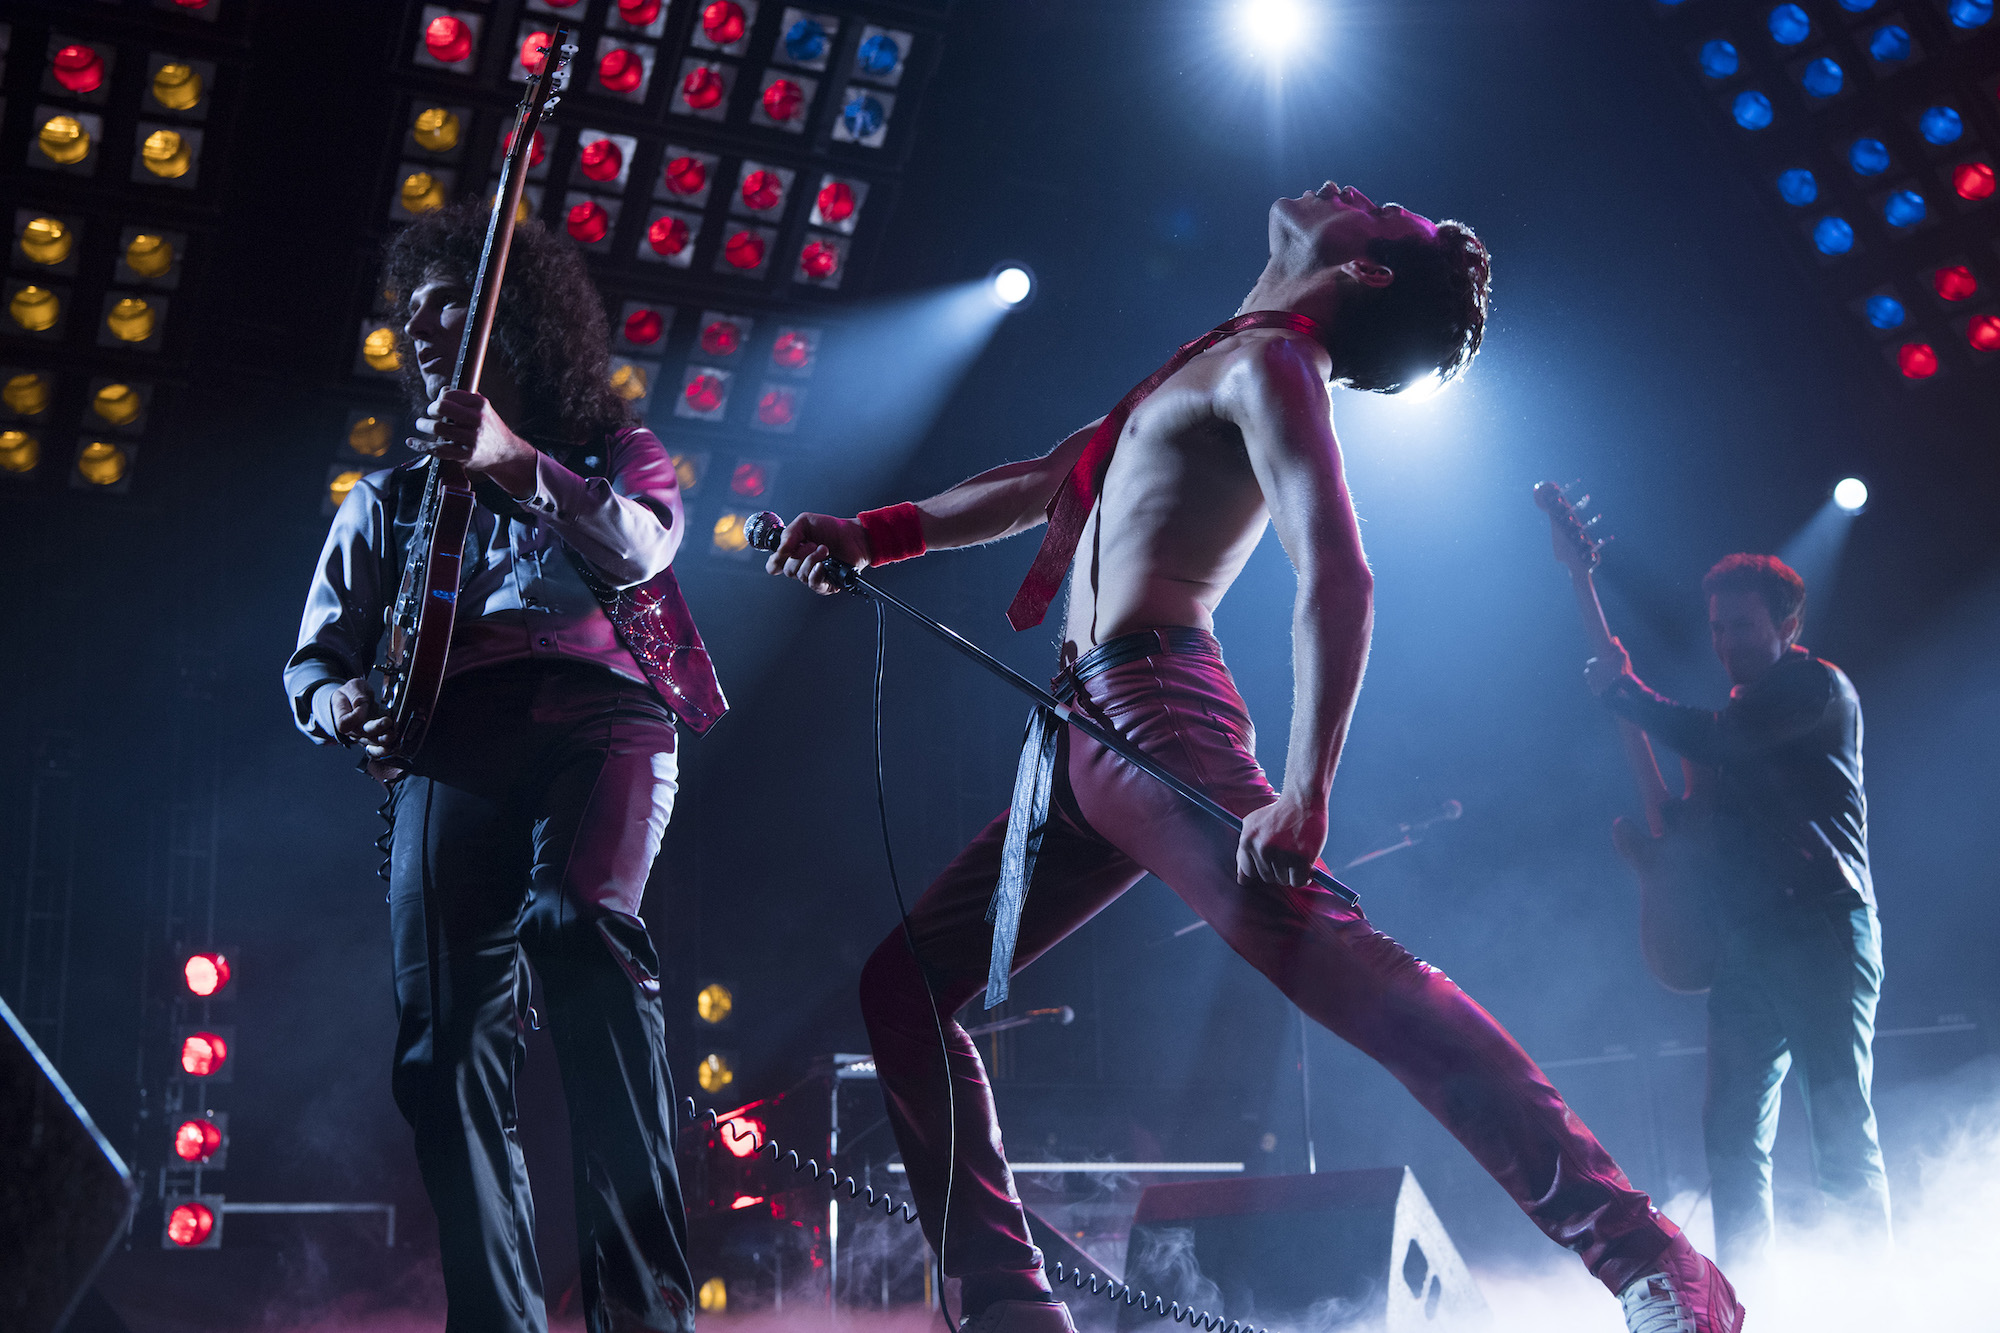 Bohemian Rhapsody Image Show Off Rami Malek As Freddie Mercury